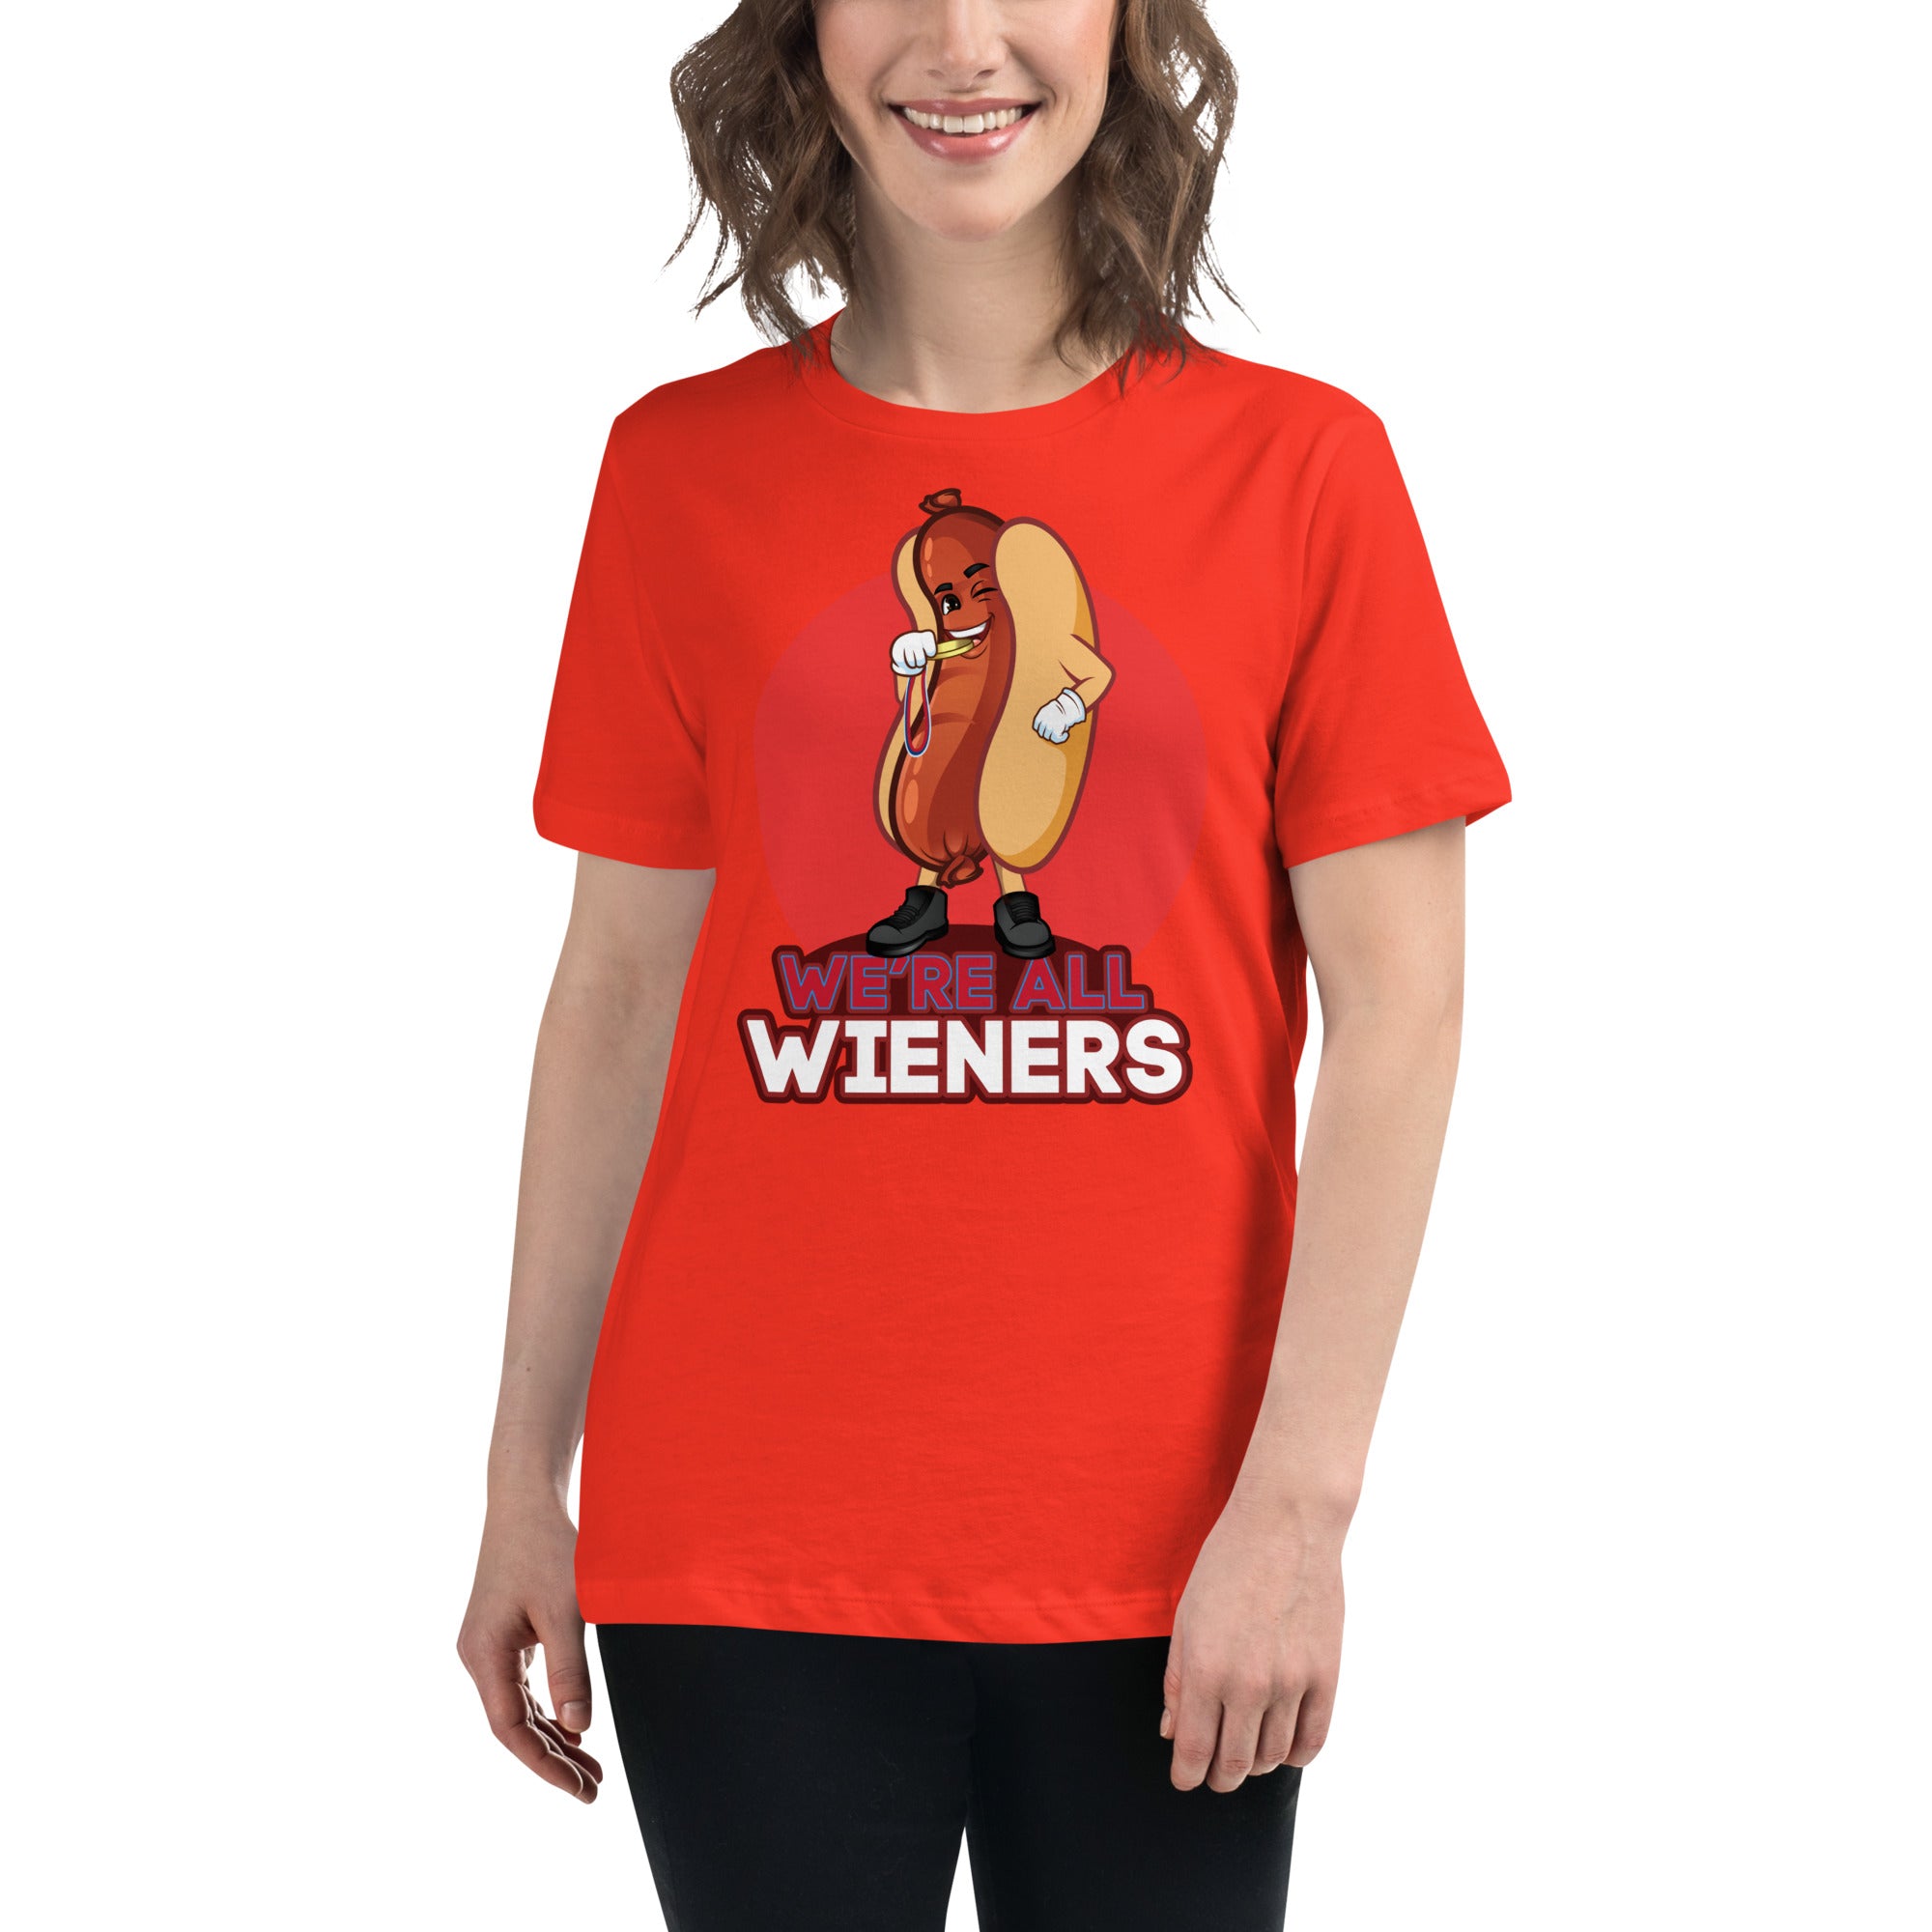 We're All Wiener's Women's Premium Fit T-Shirt - Red